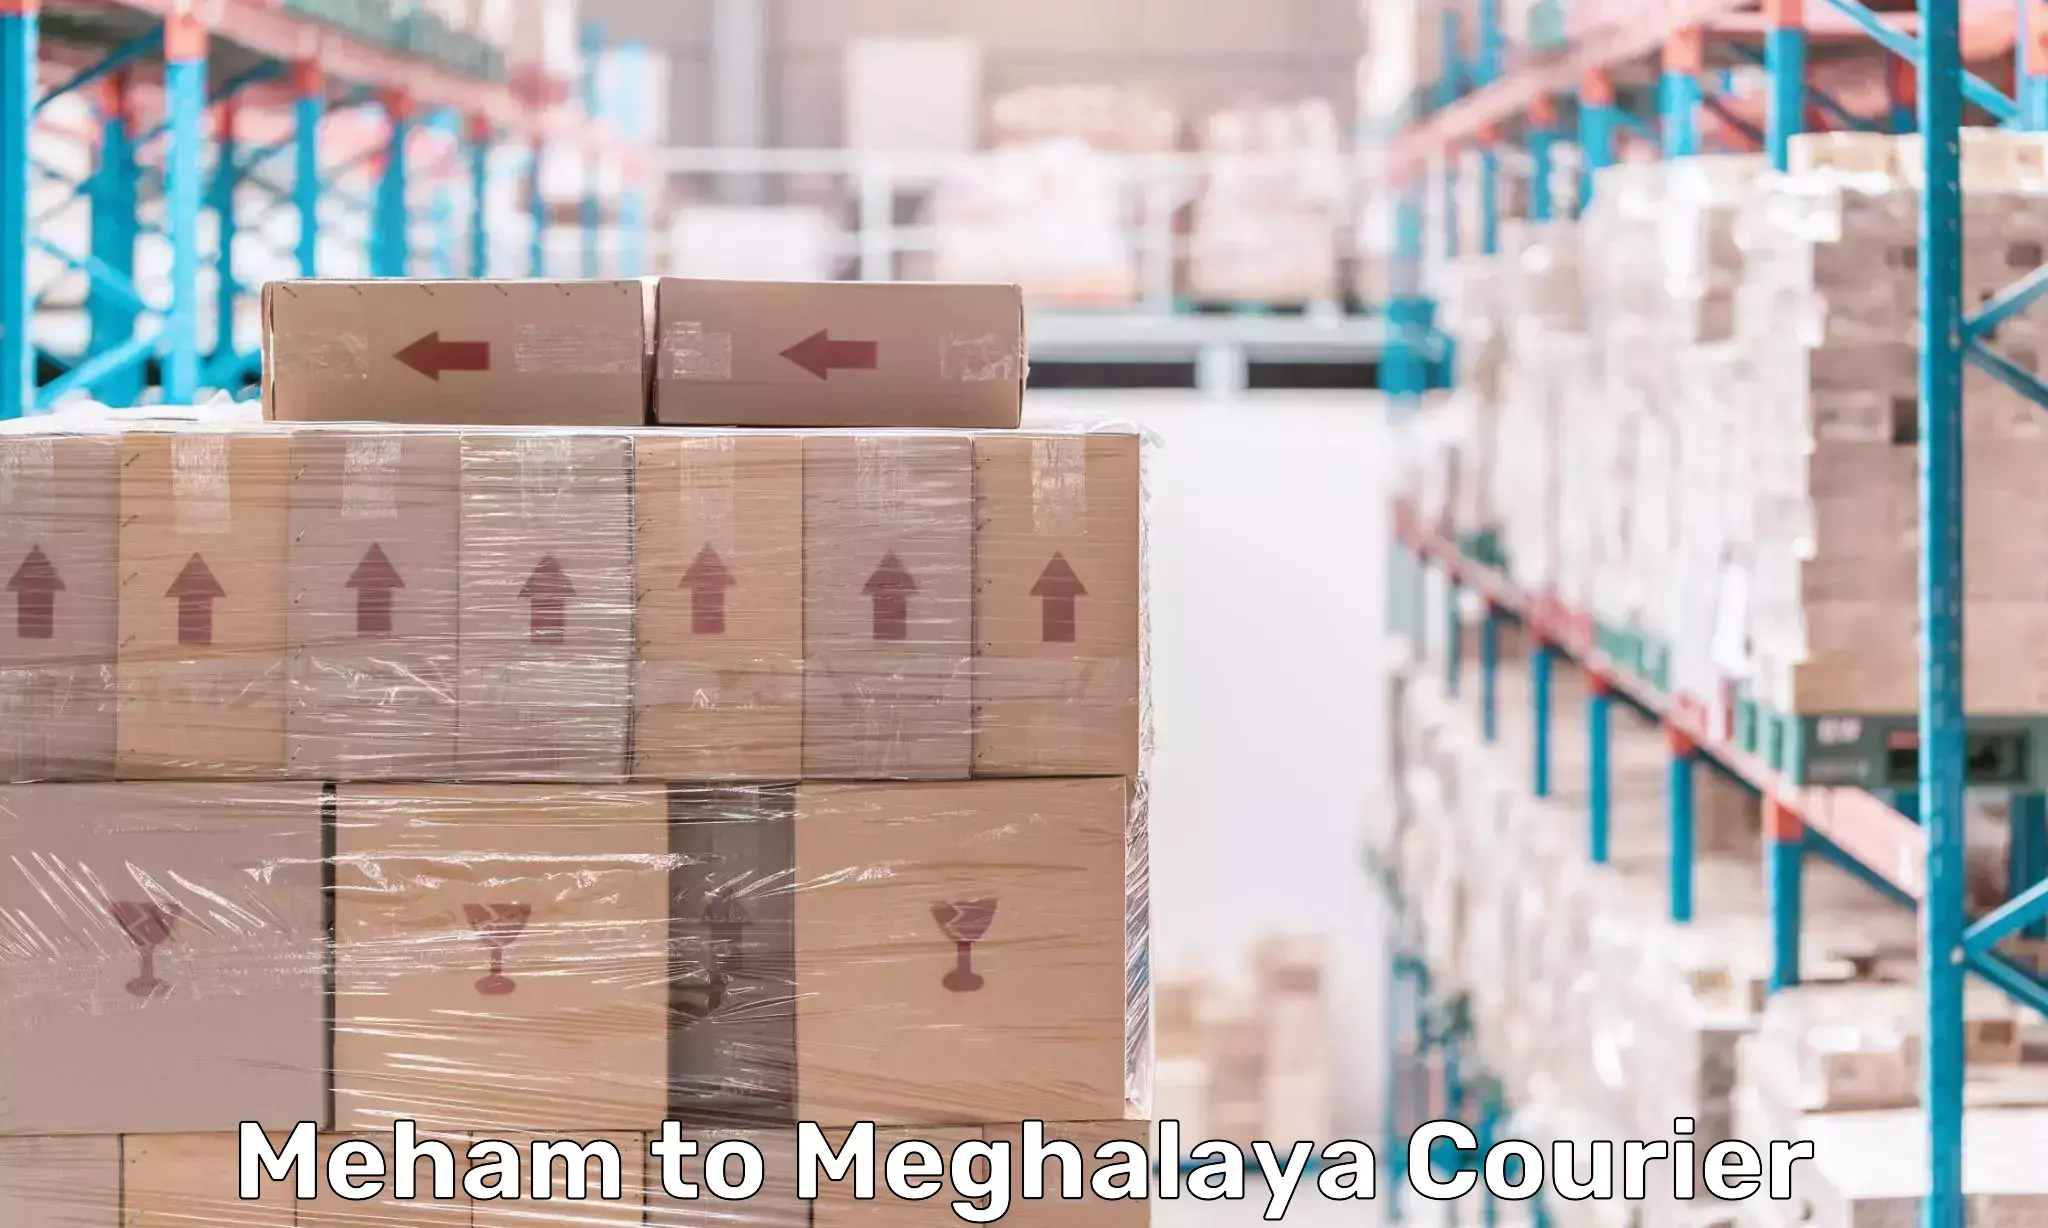 Courier app Meham to Meghalaya